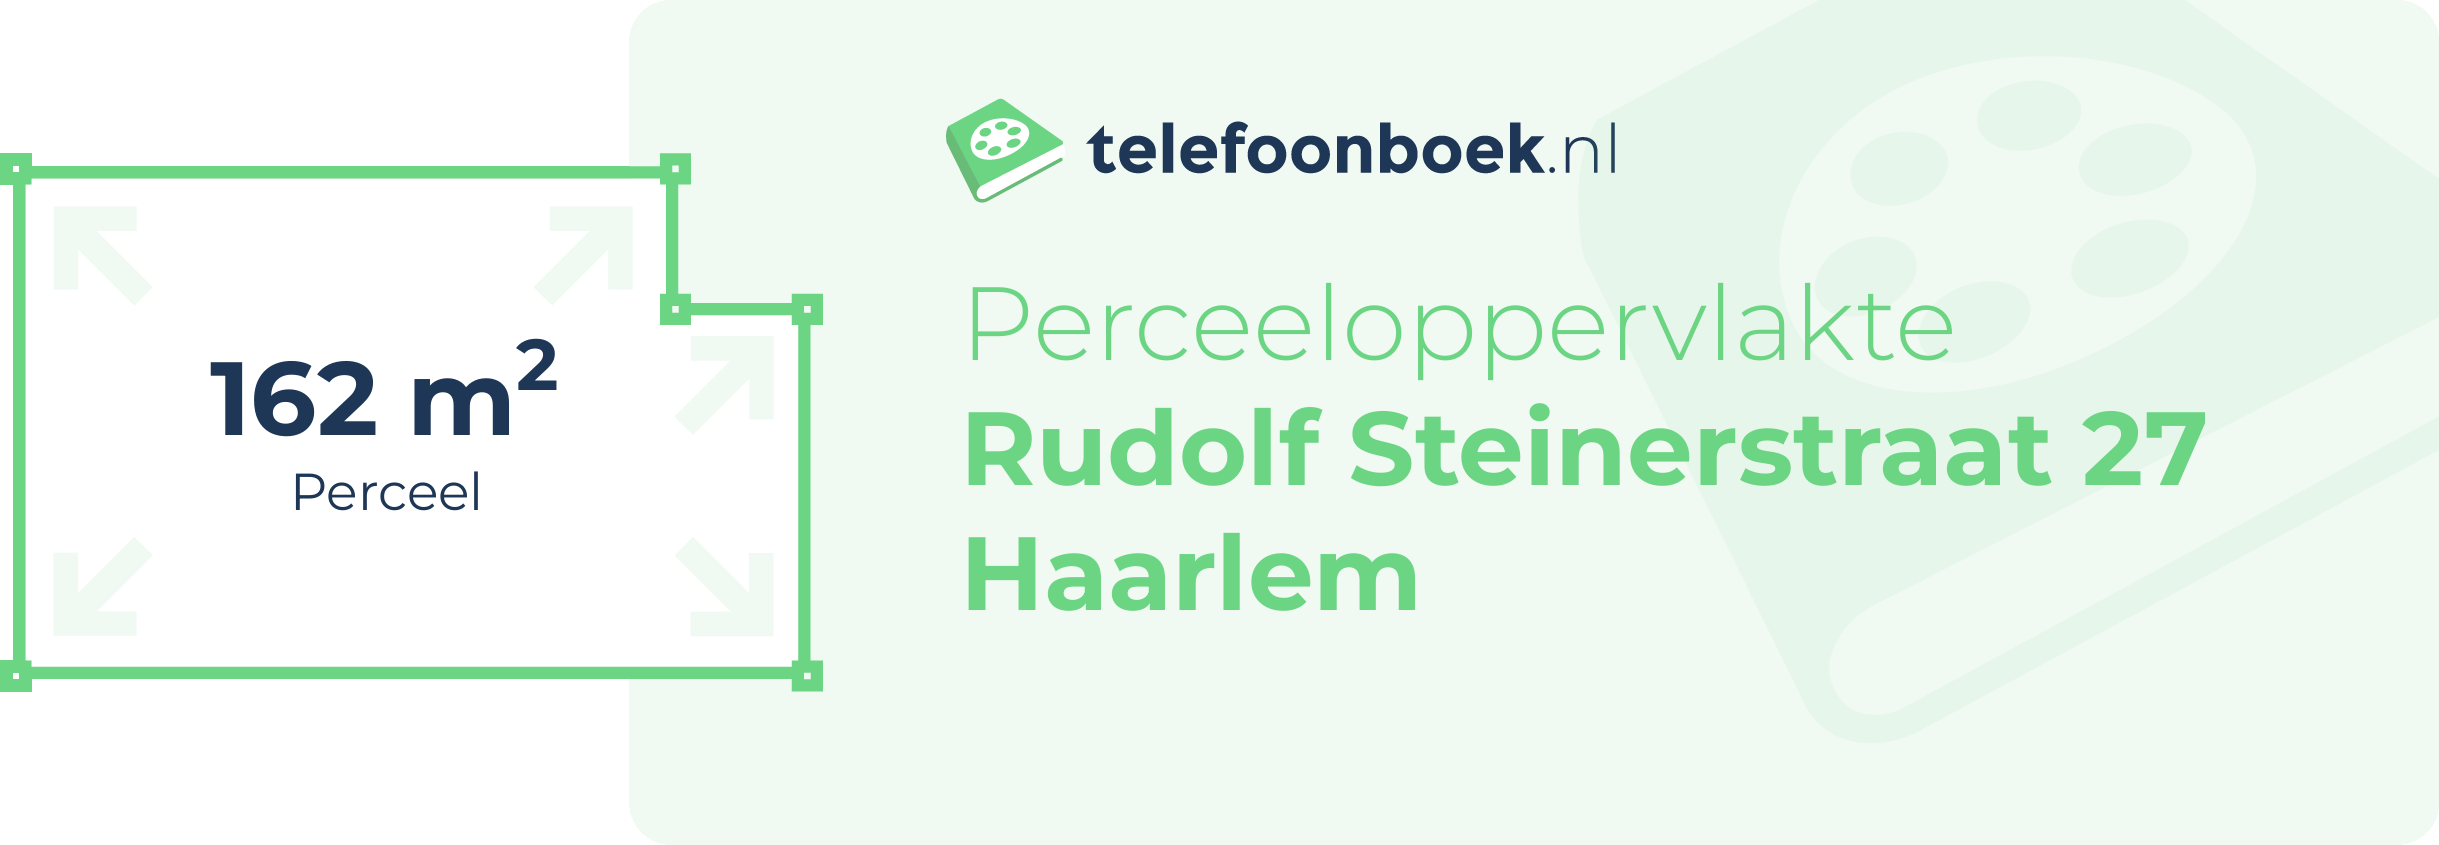 Perceeloppervlakte Rudolf Steinerstraat 27 Haarlem